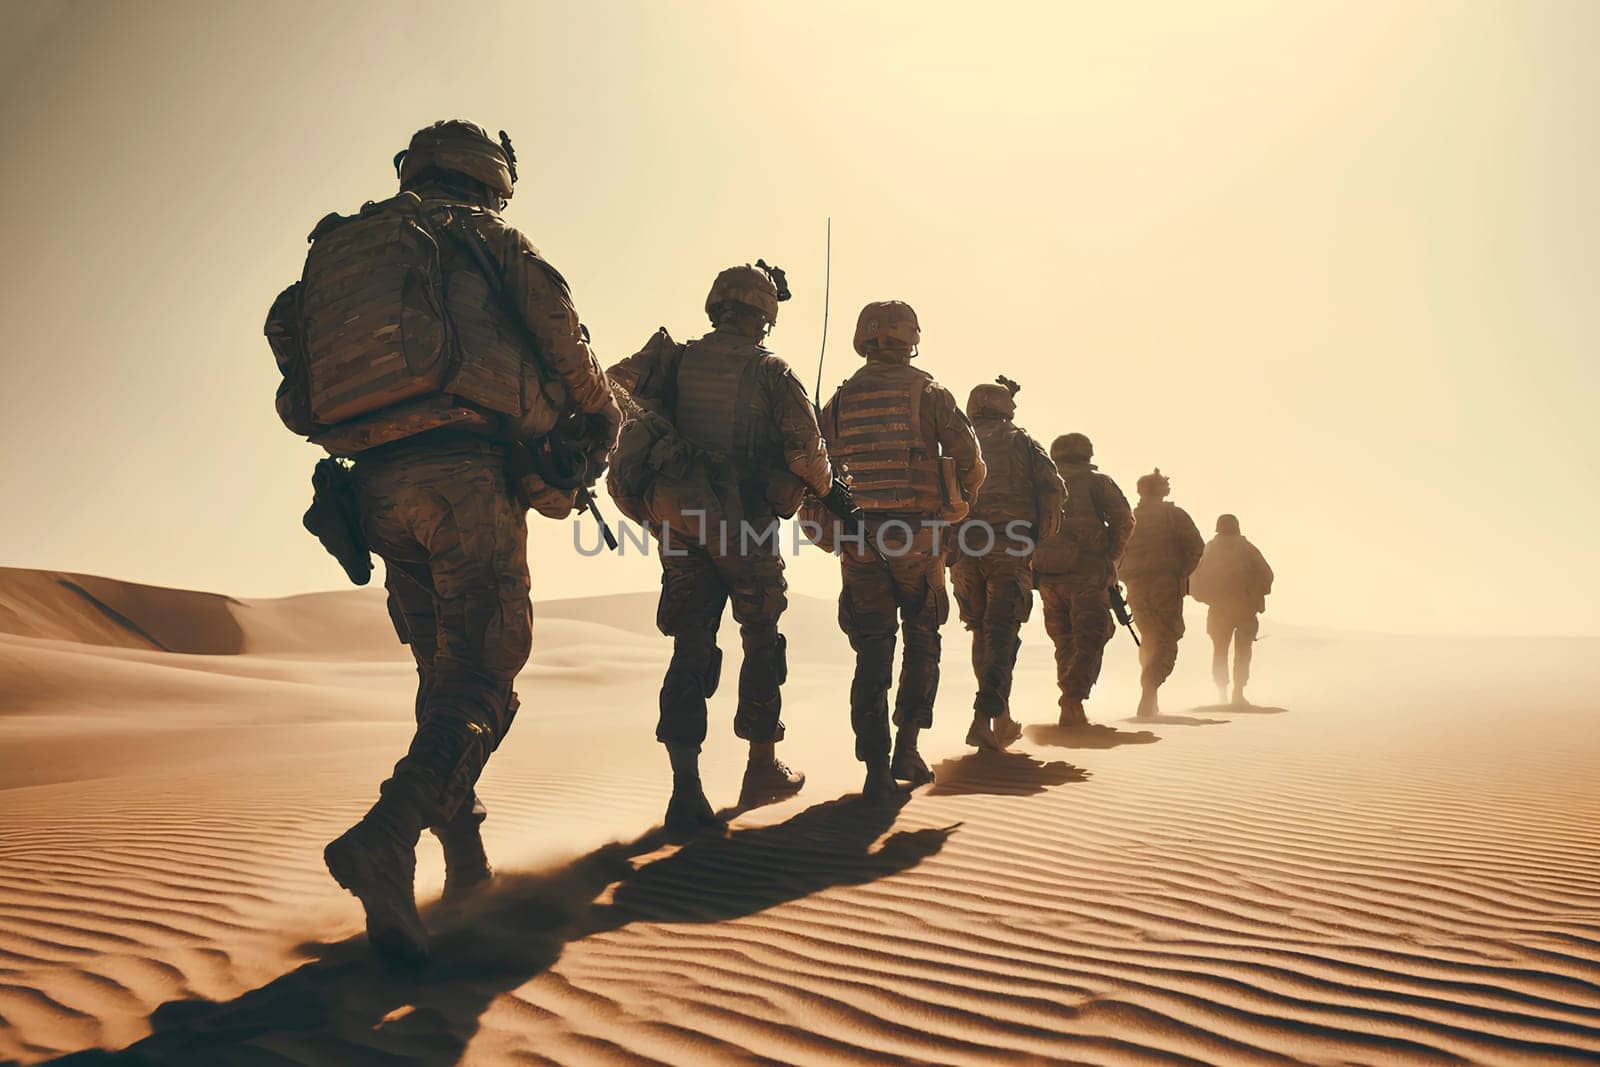 Soldiers in camouflage uniforms with machine guns walk through the desert under the scorching sun by Annado